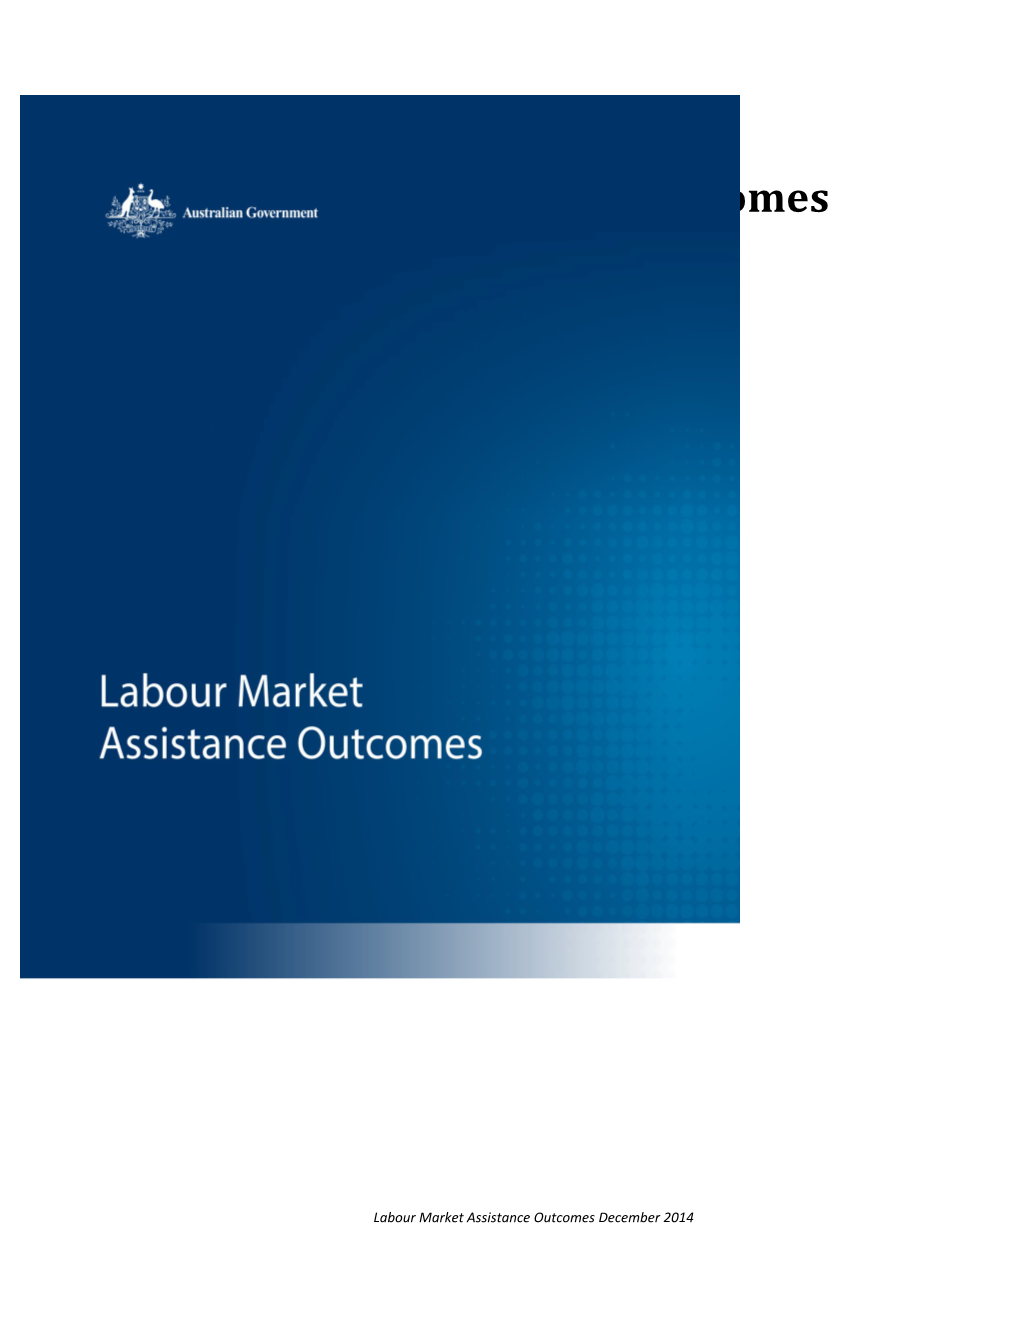 Labour Market Assistance Outcomes Report December 2013 - IEP